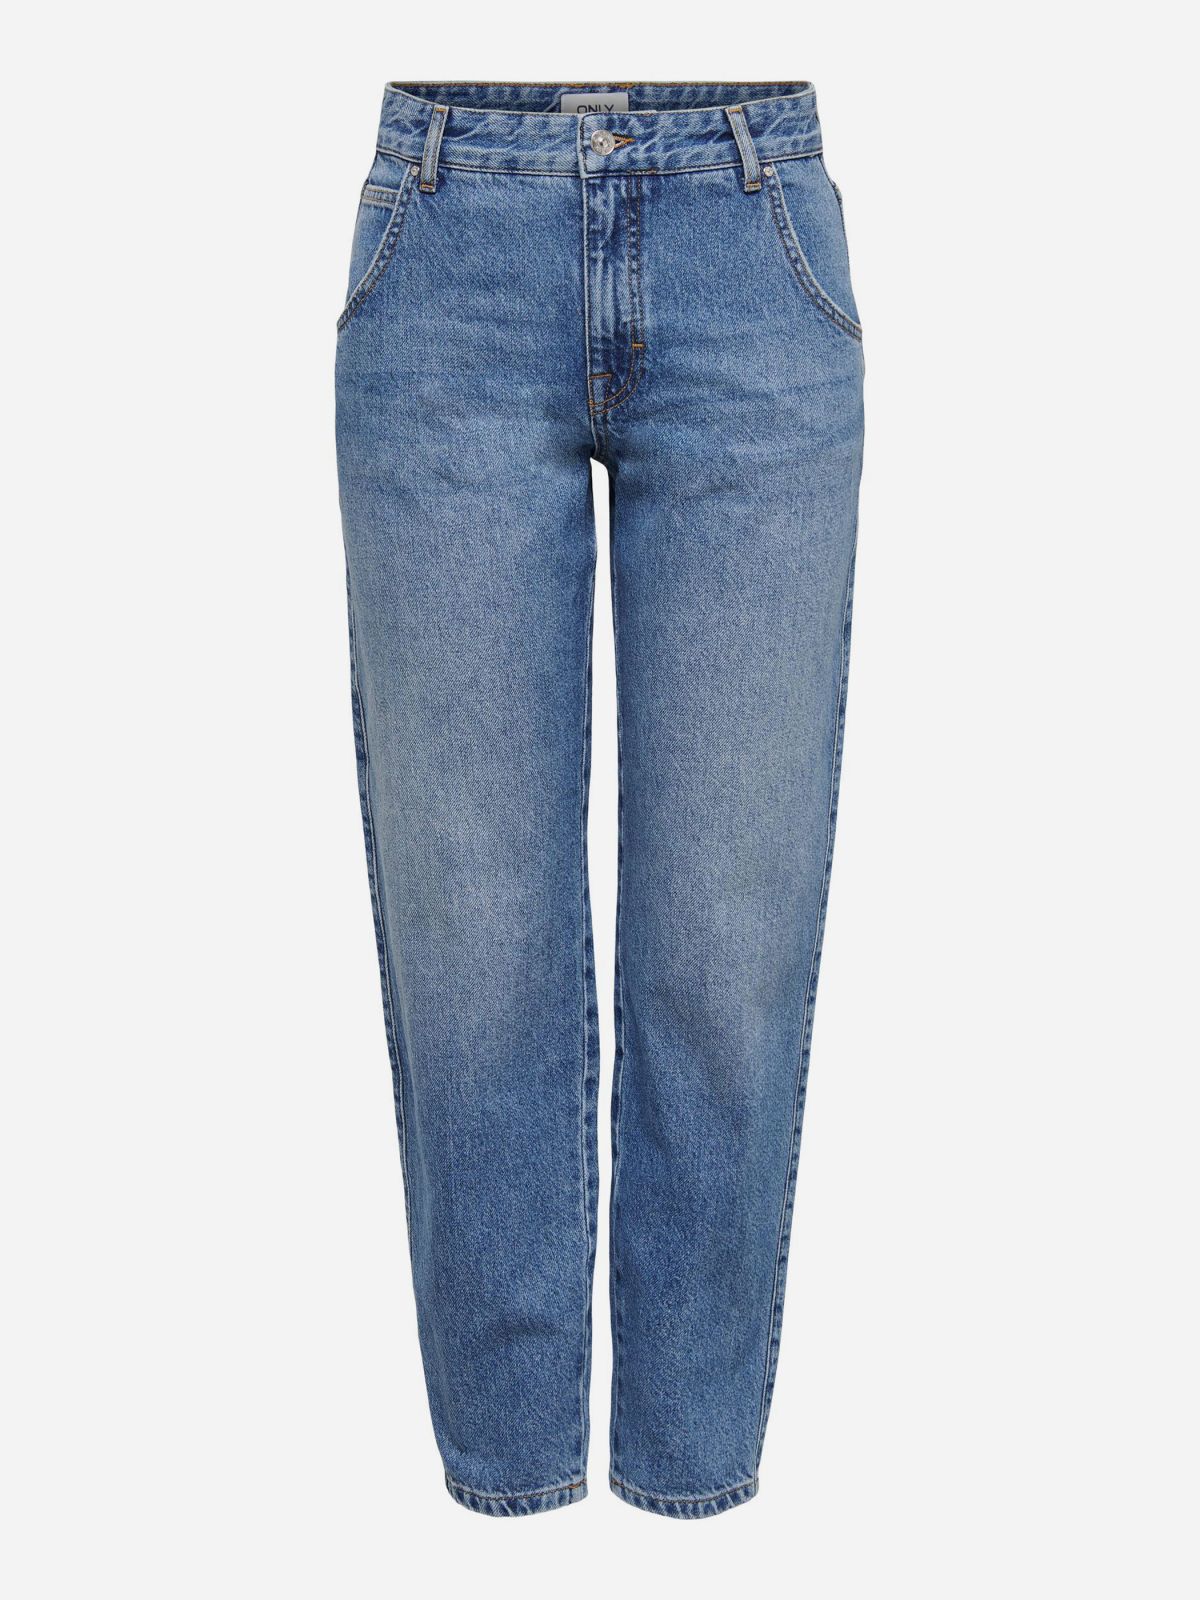  ג'ינס בגזרה ישרה / נשים של ONLY